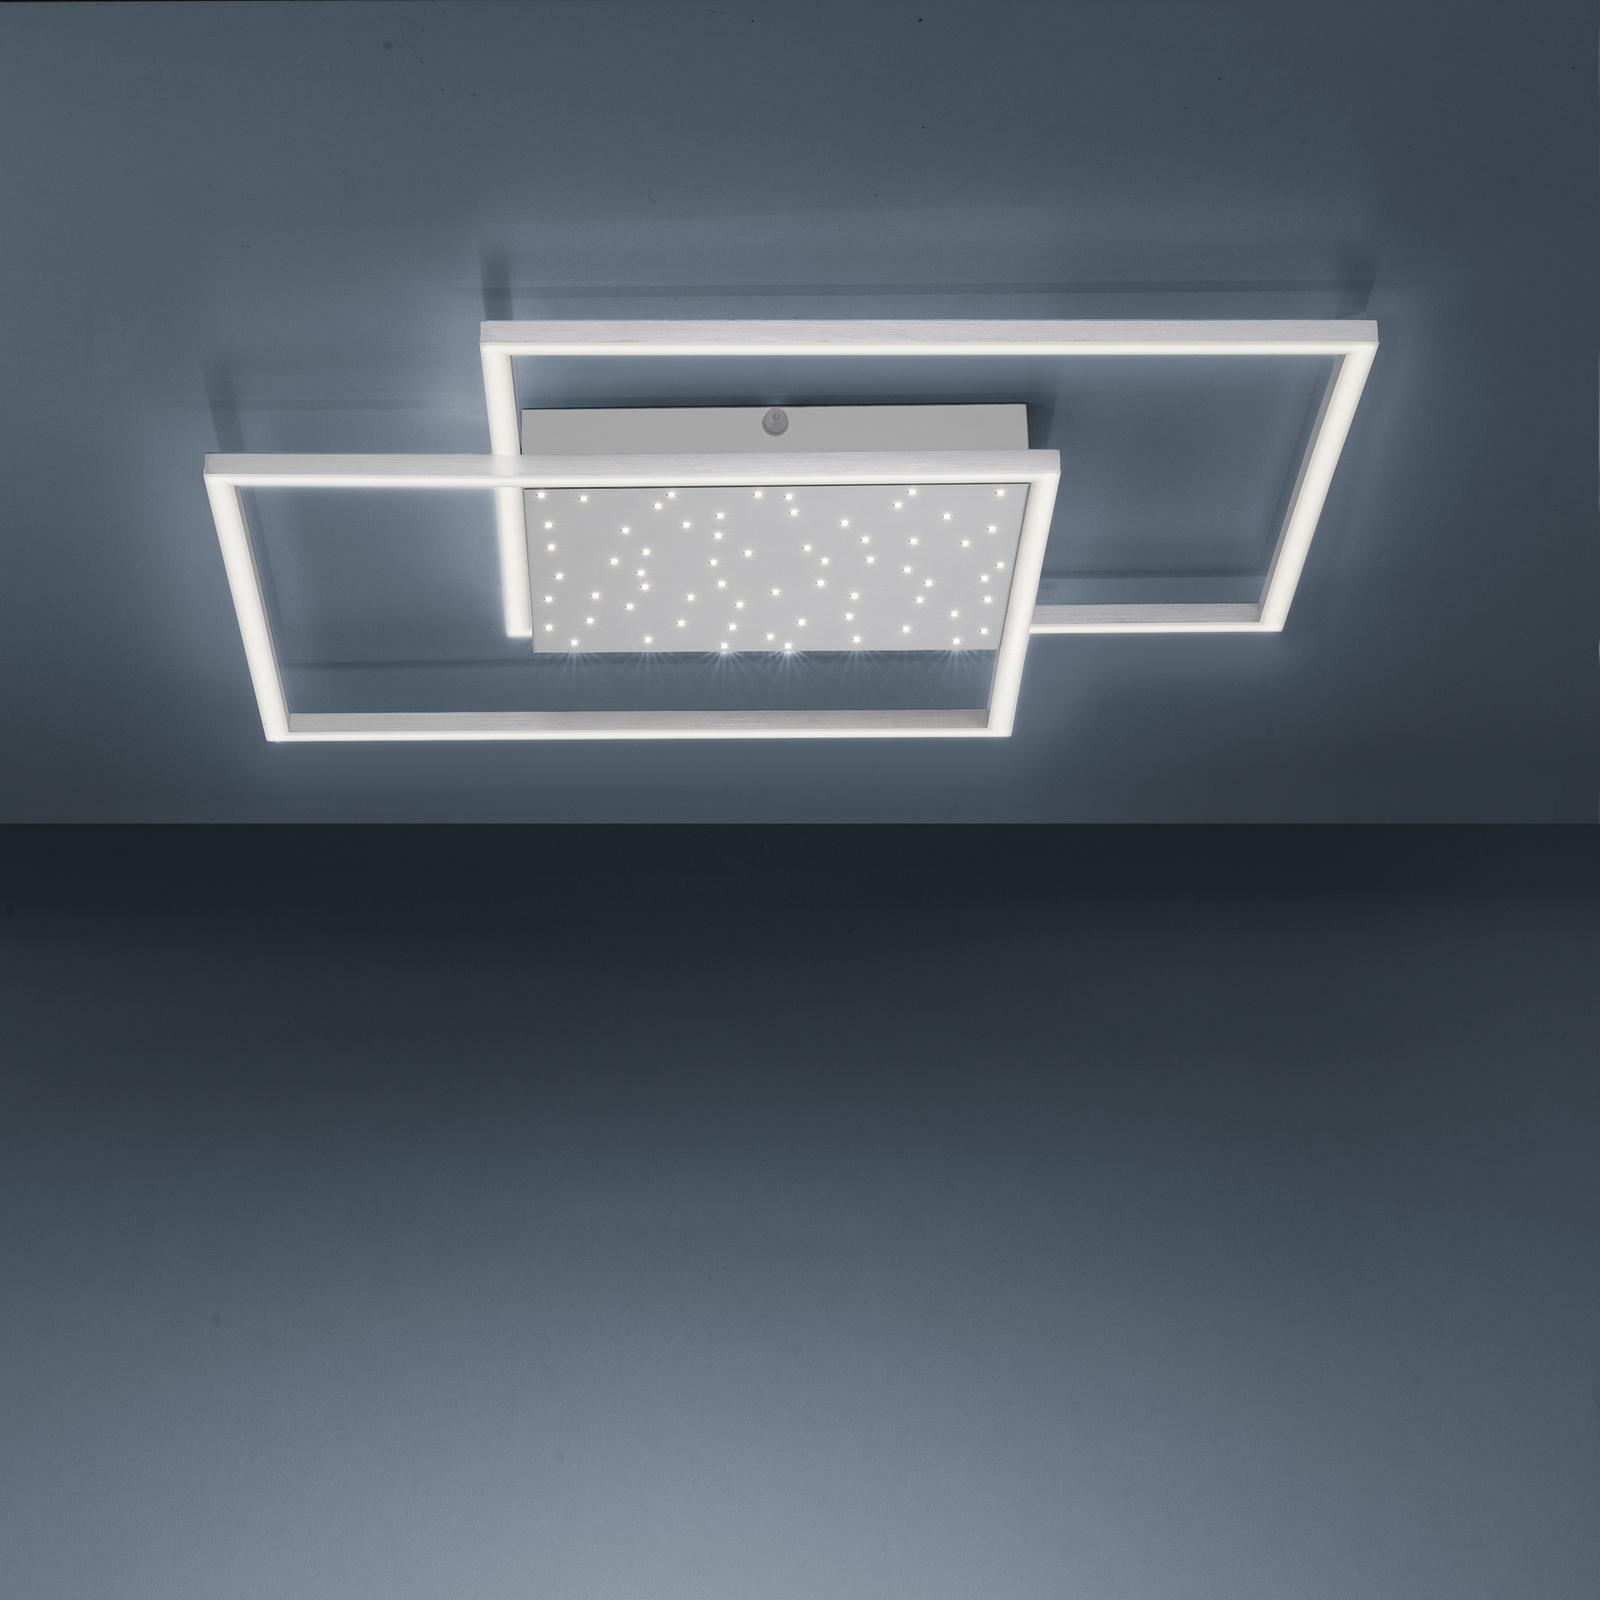 Paul Neuhaus Yuki plafonnier LED, forme angulaire